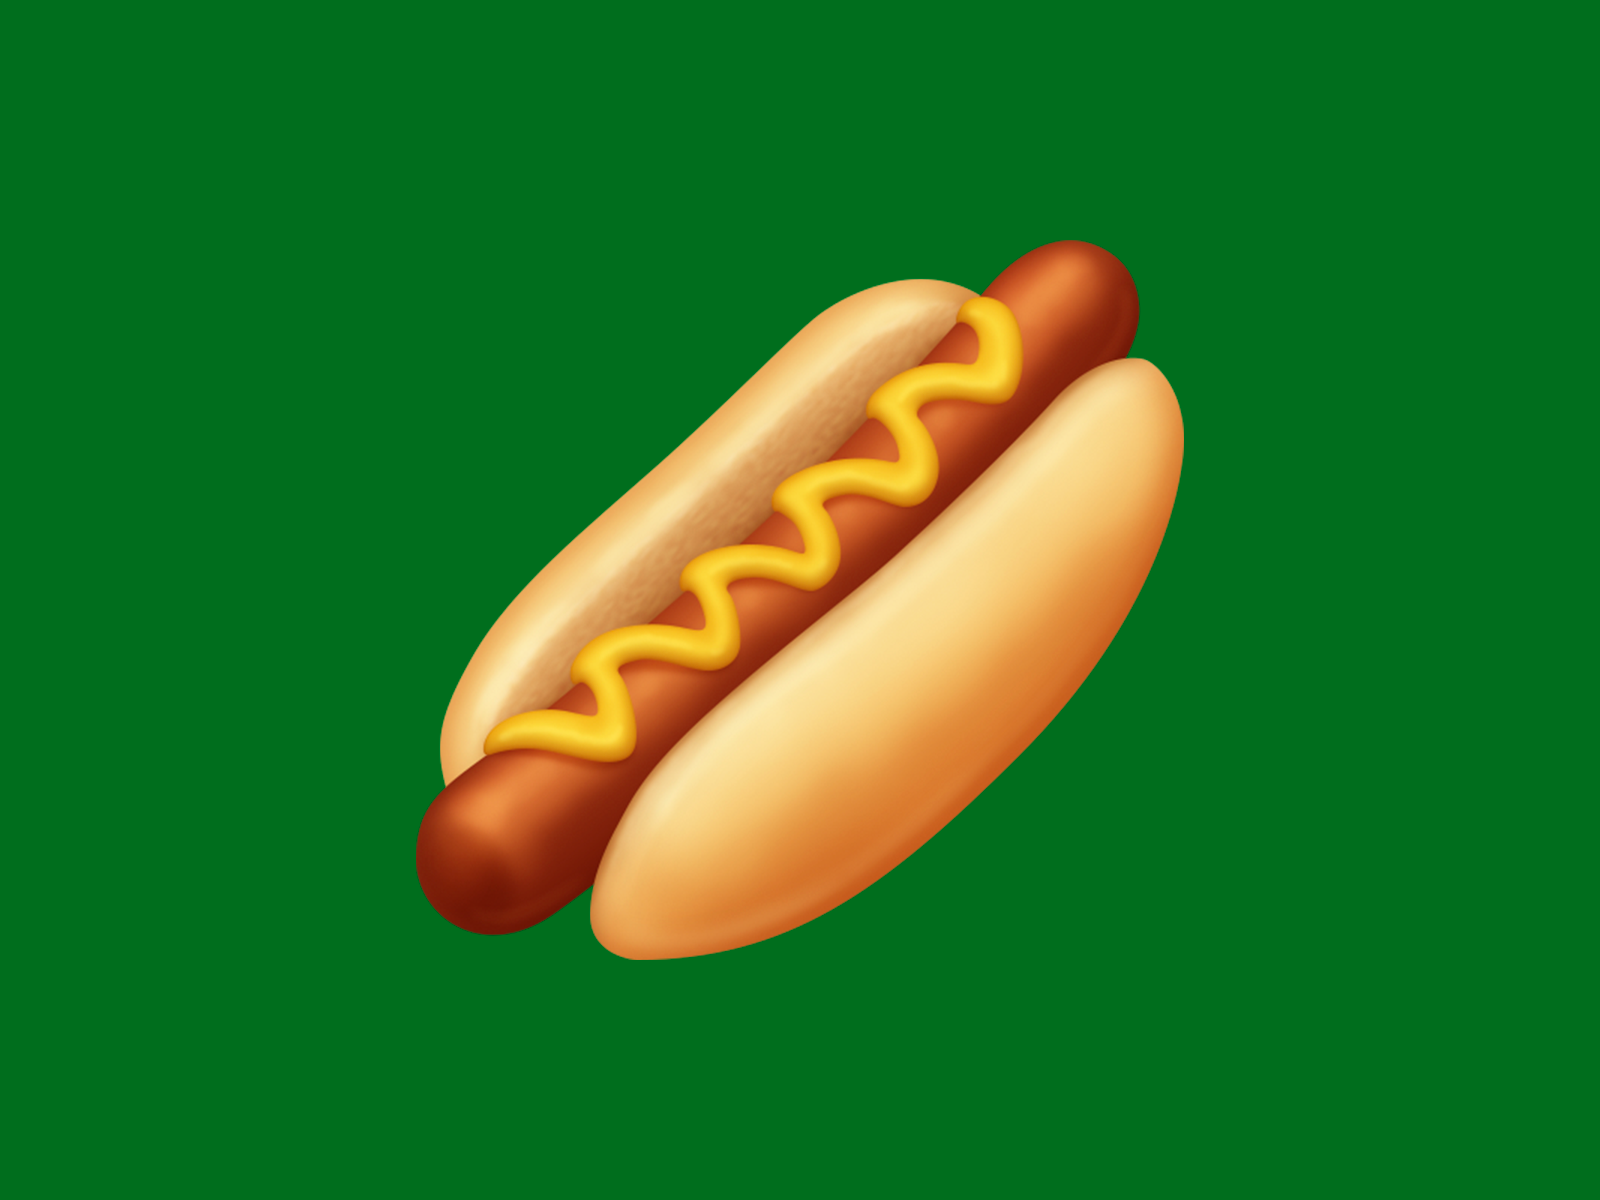 Включи сосиска сосиска туц тудуц. Грин дог хотдог. Сосиски для хот догов. Хот дог на зеленом фоне. Emoji хот дог.